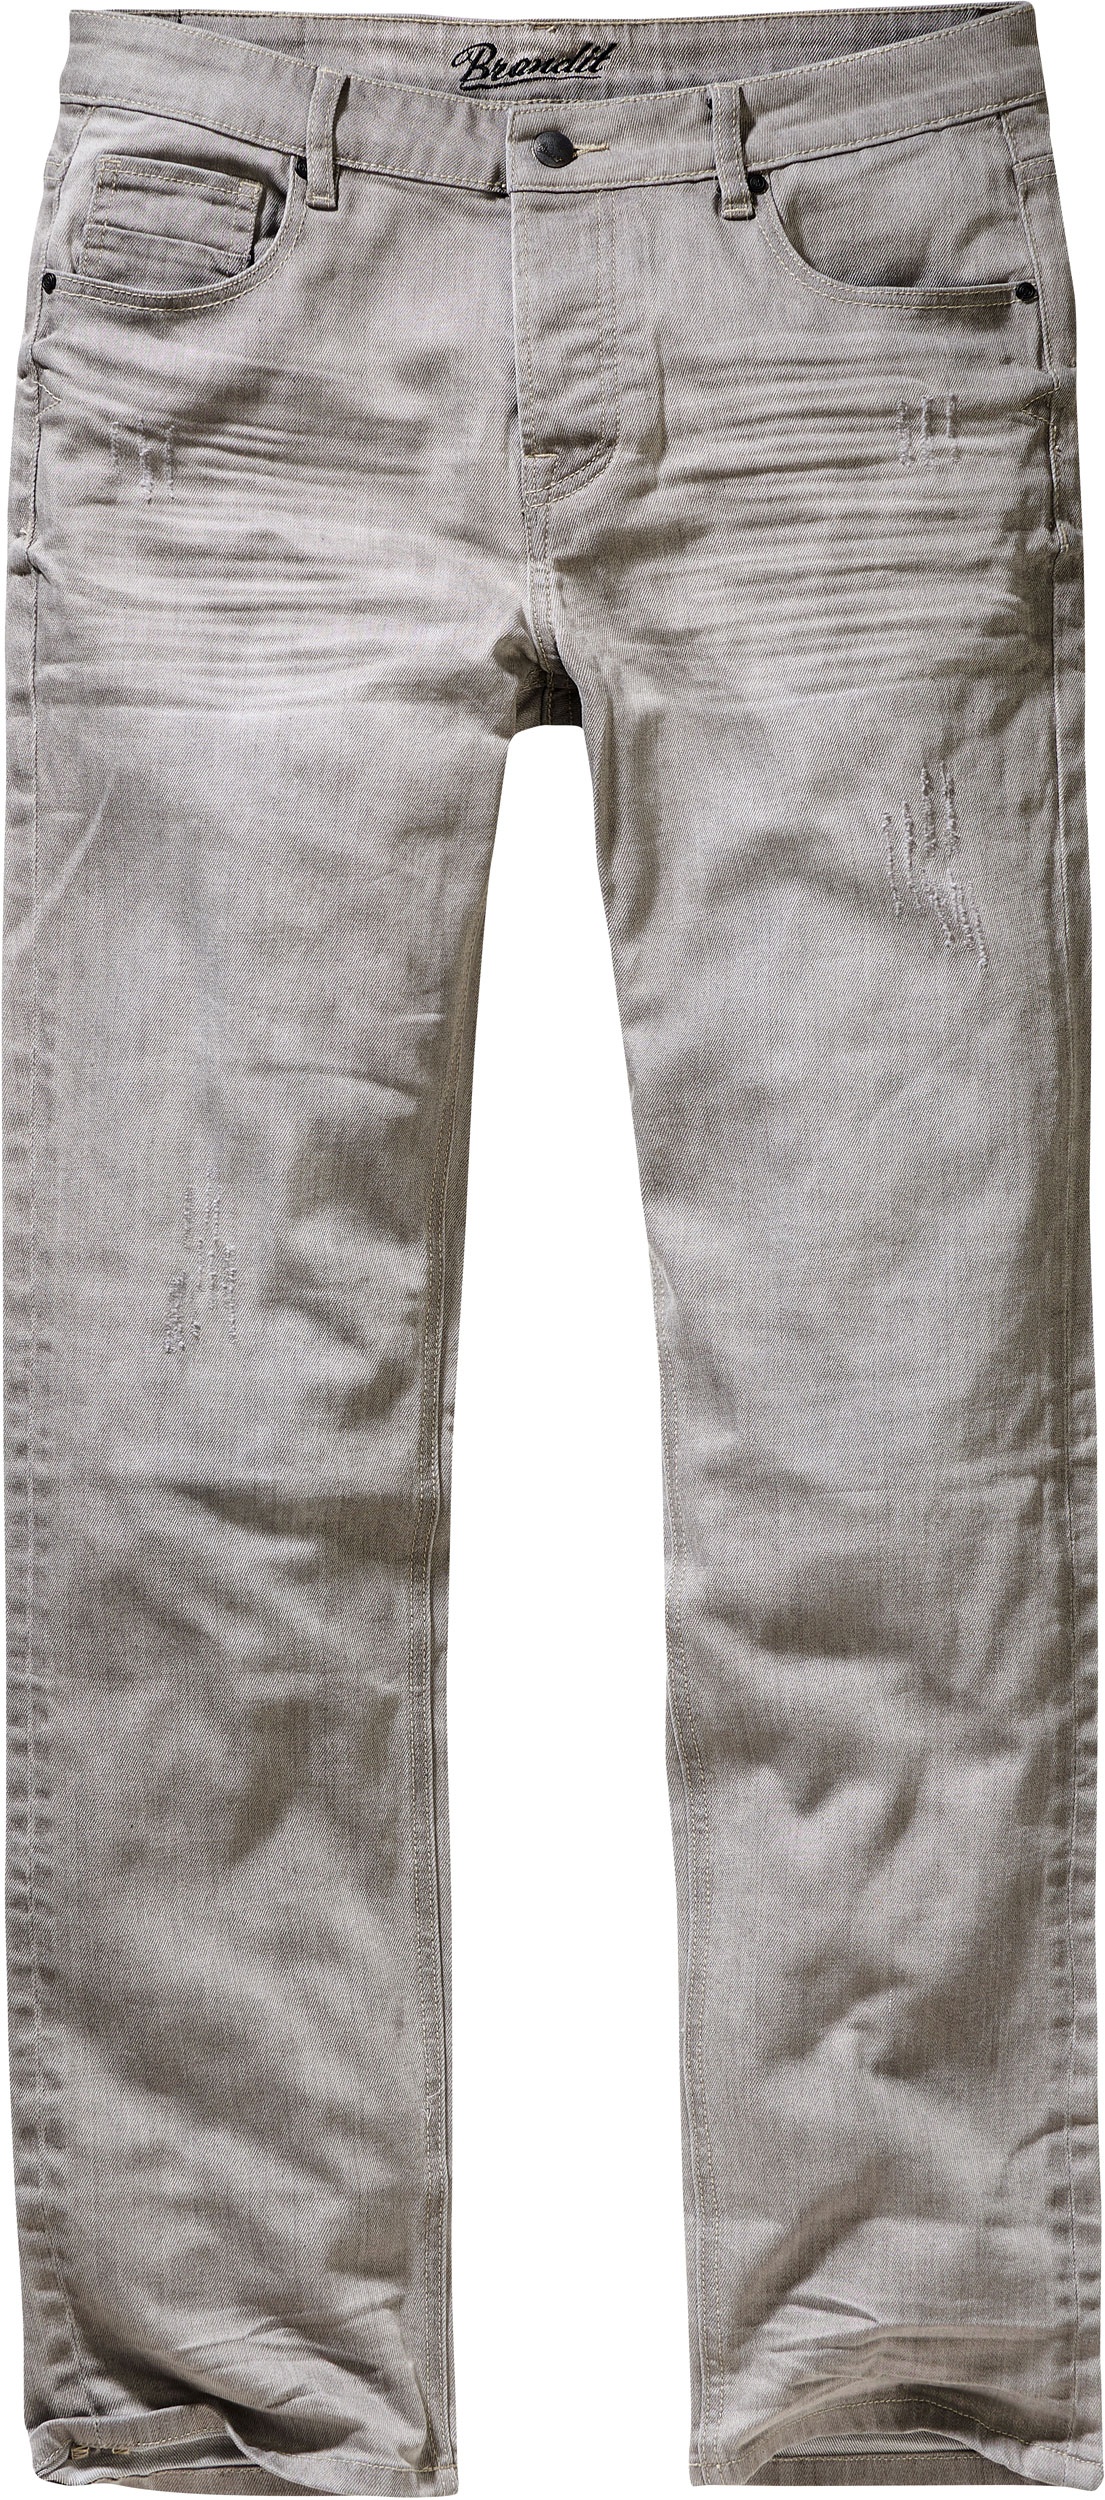 Brandit Jake Denim, Jeans - Gris - 32/34